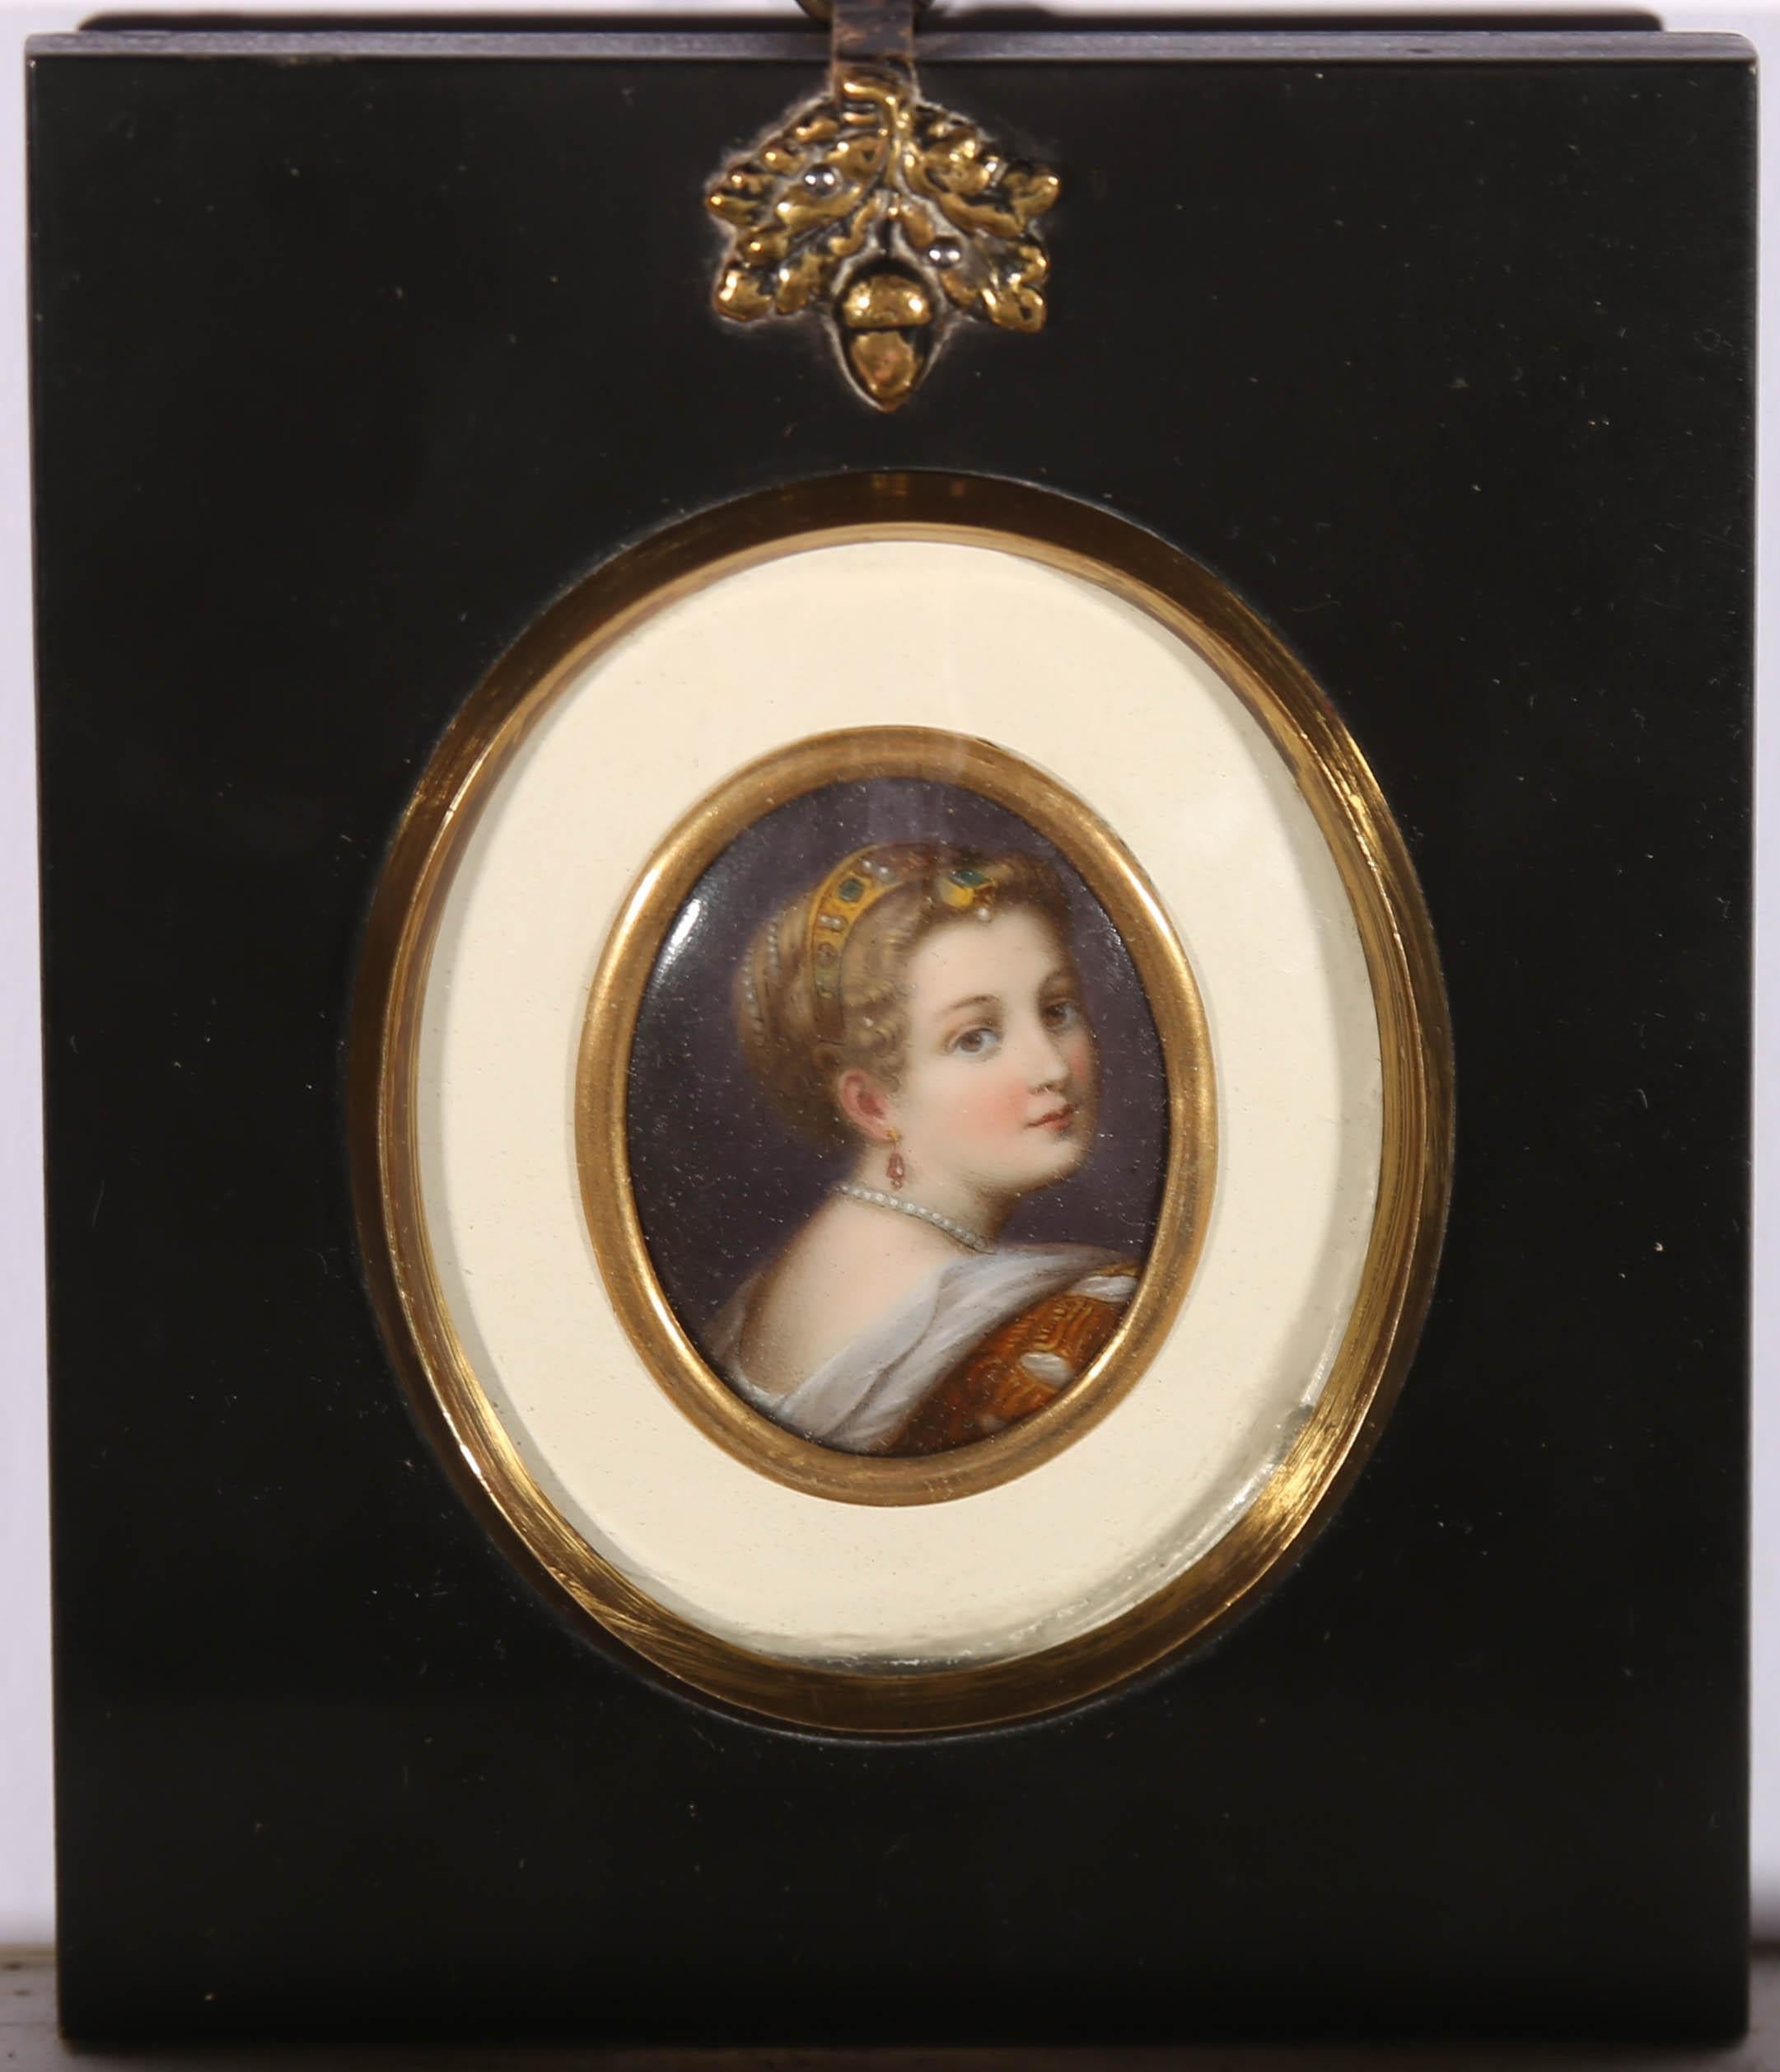 Unknown Portrait Painting - Late 19th Century Enamel Miniature - Portrait of a Wealth Women